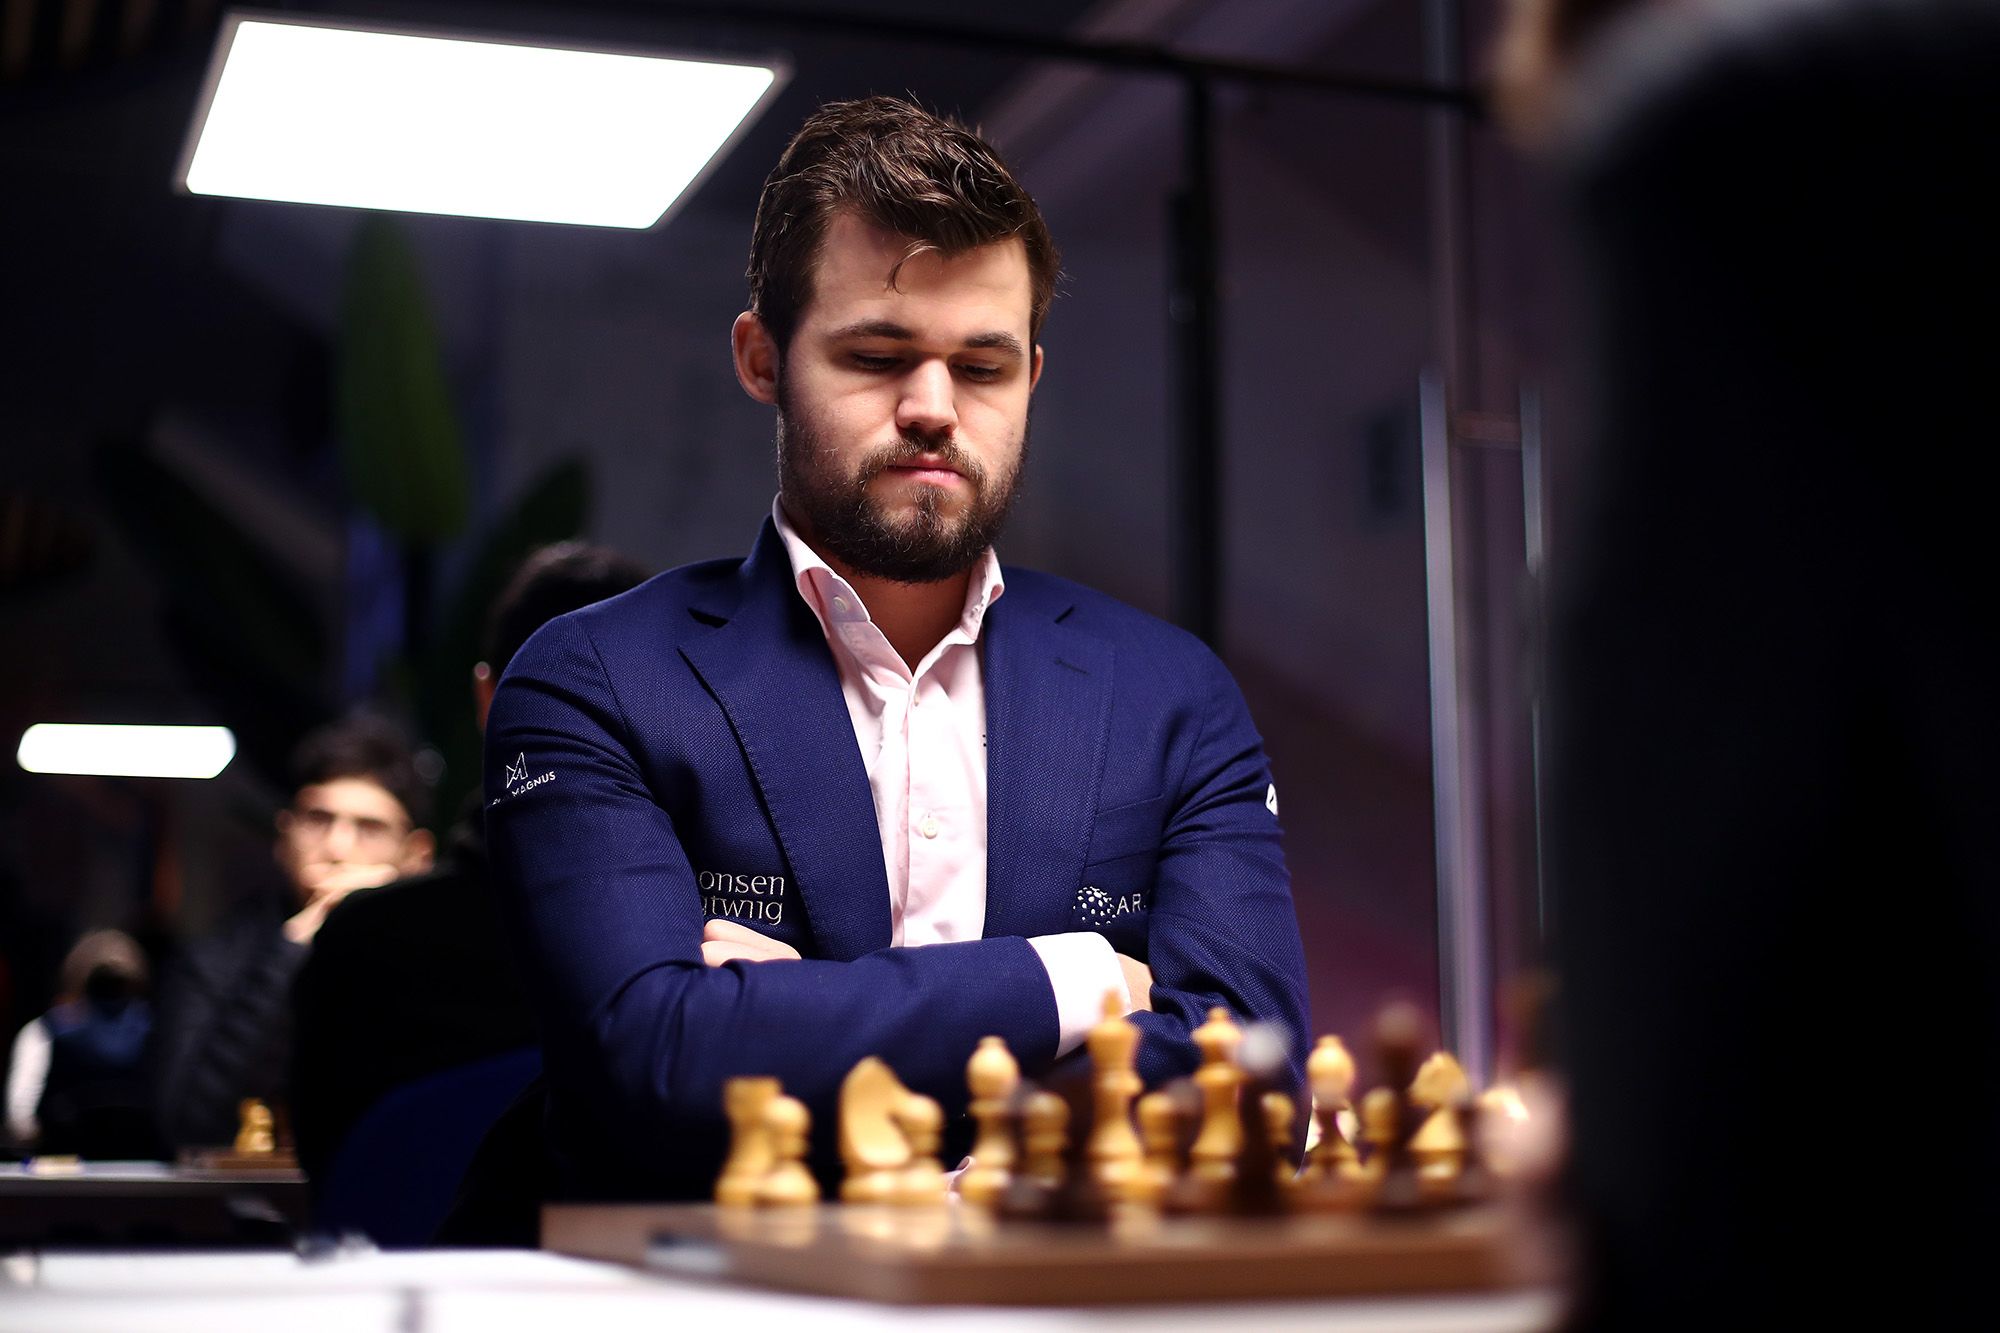 Magnus Carlsen accuses Hans Niemann of recent cheating